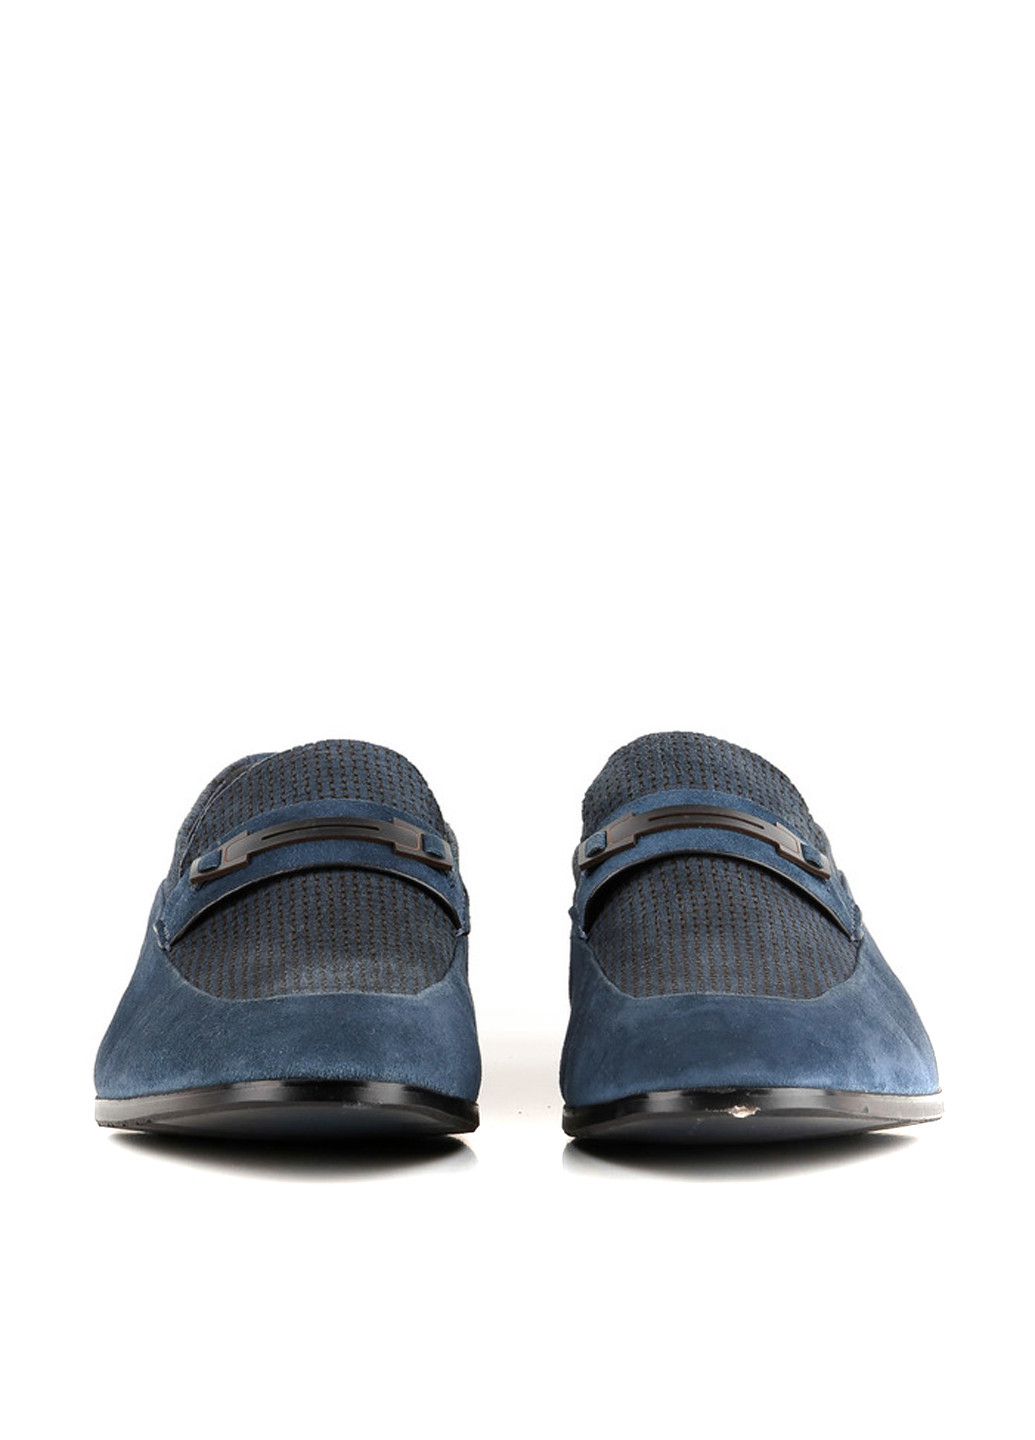 Синие классические туфли Basconi